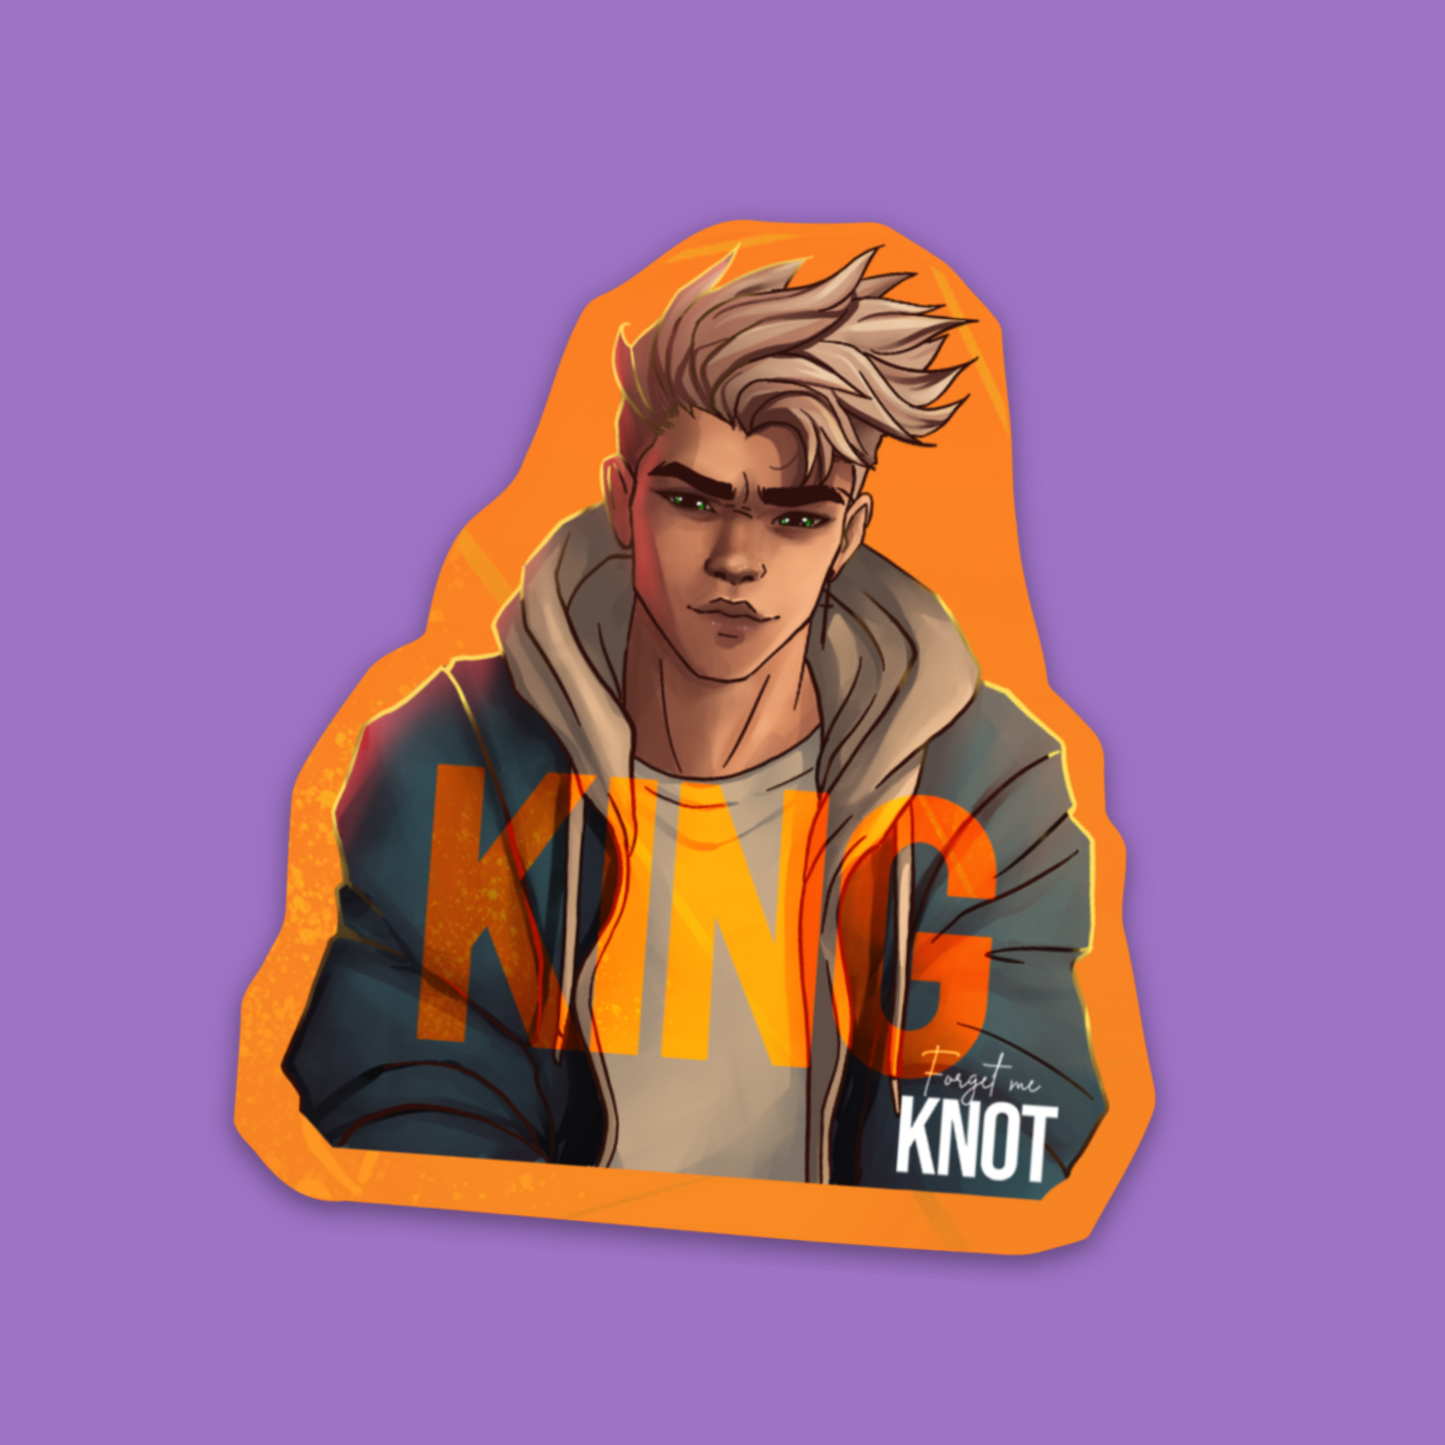 King sticker 3"x2.97"